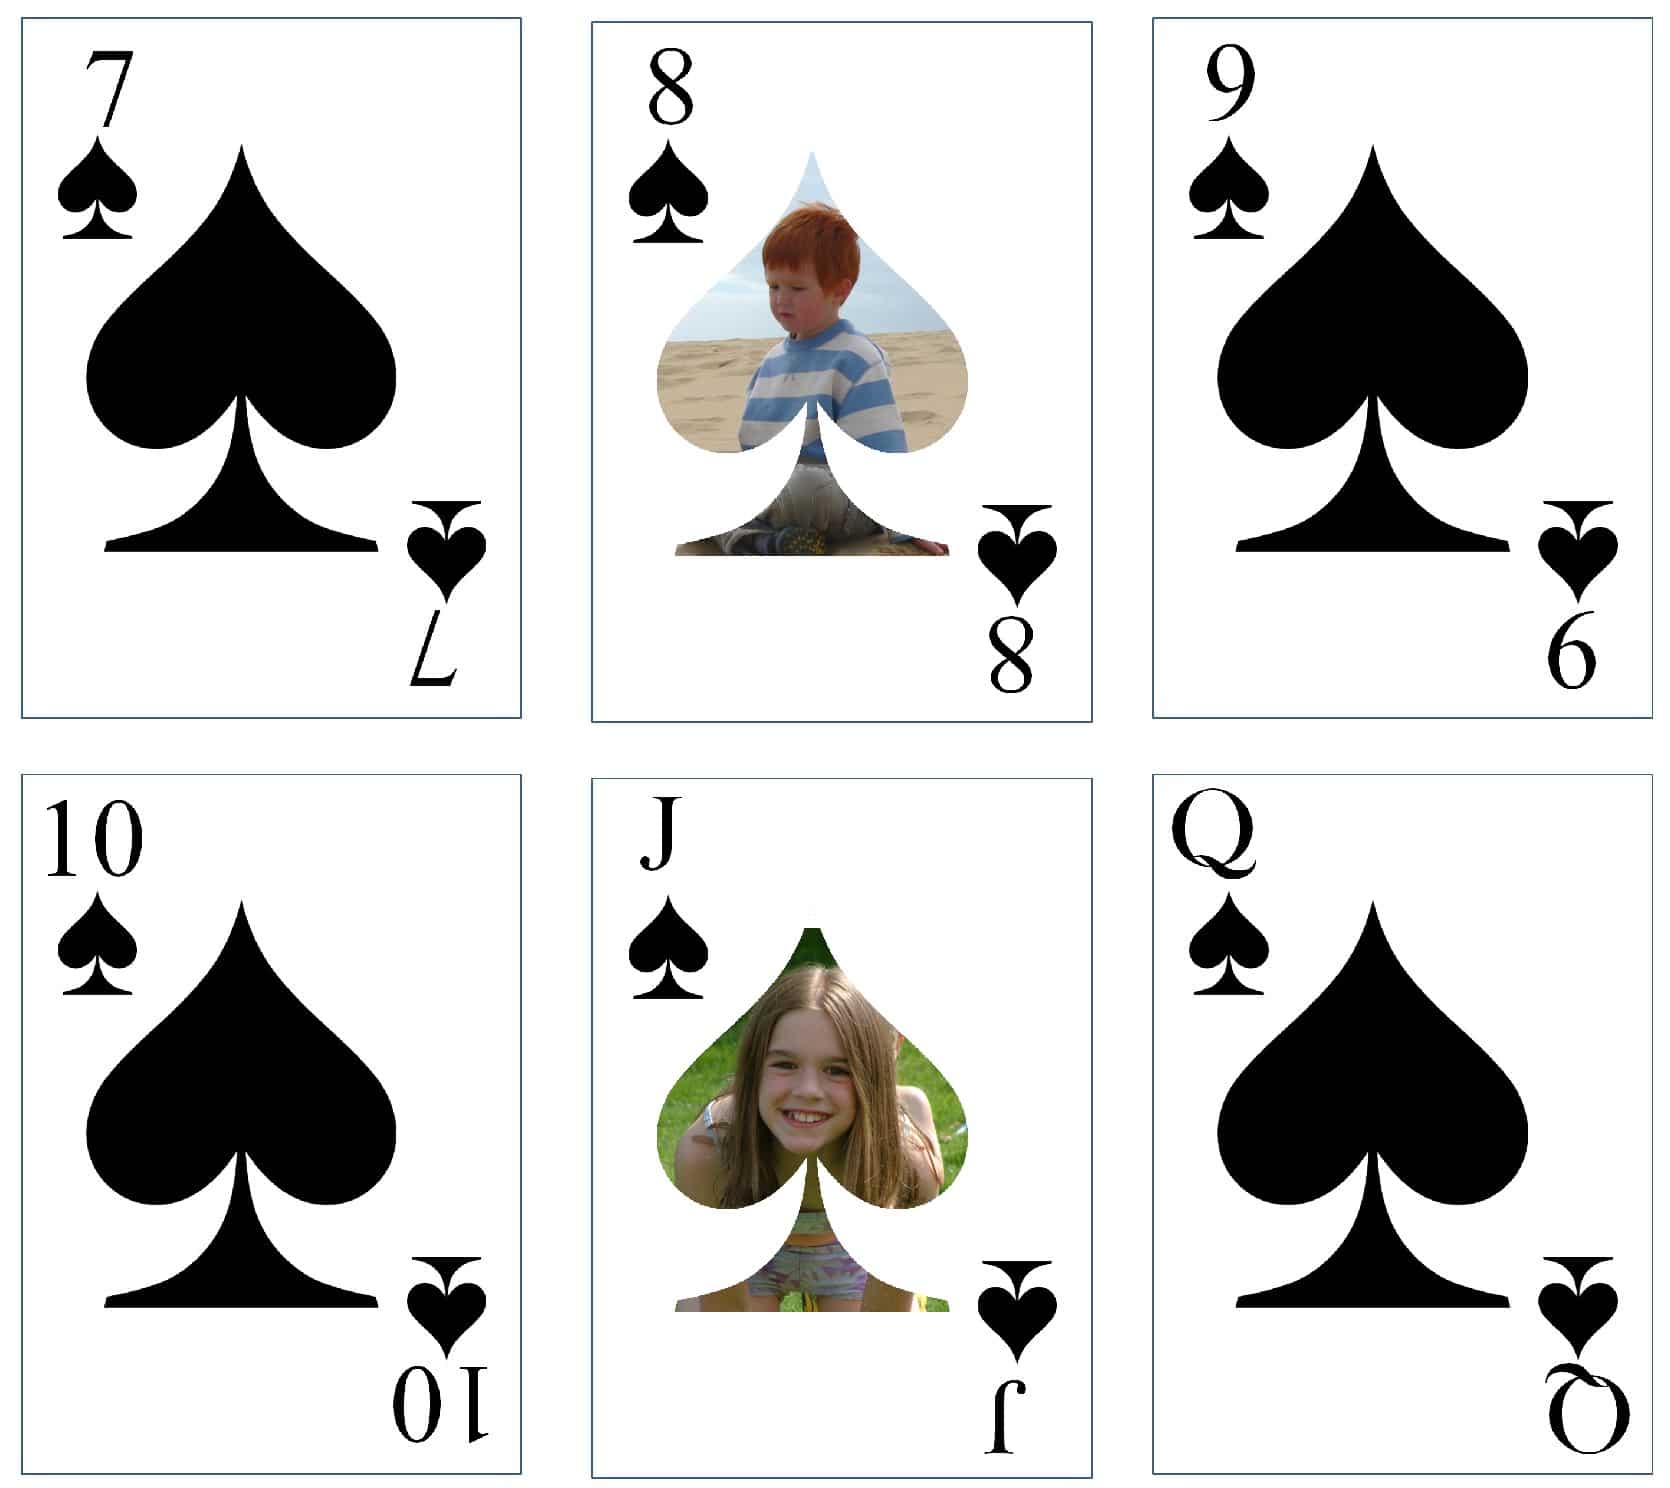 oversized-playing-cards-jumbo-paper-3-sizes-apollobox